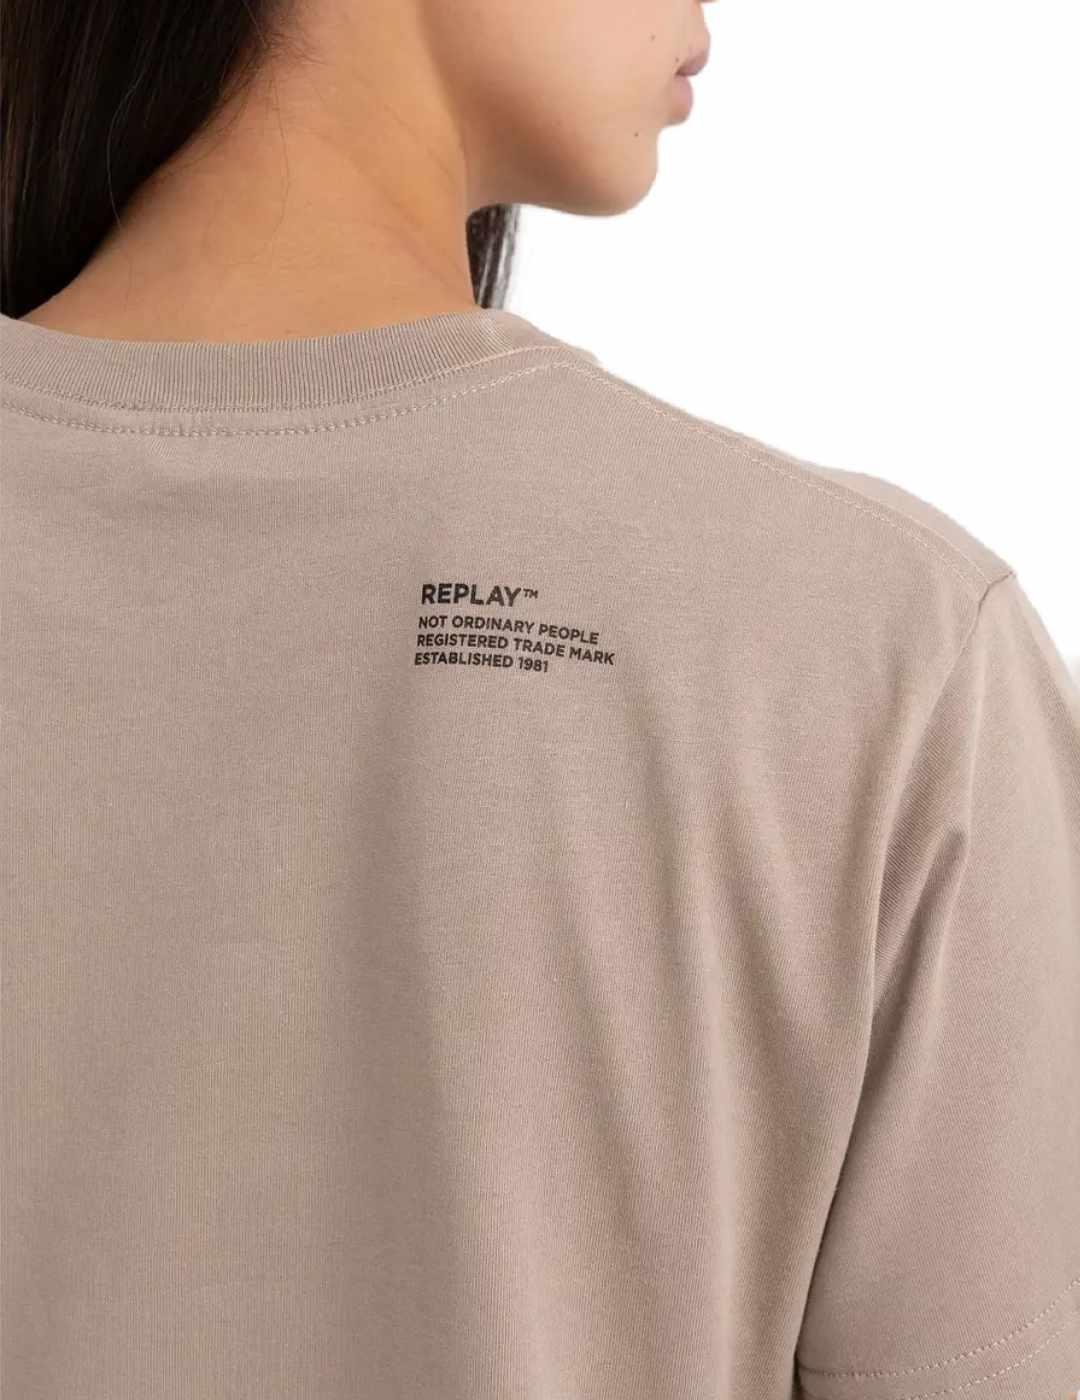 Camiseta Replay beige de manga corta para mujer